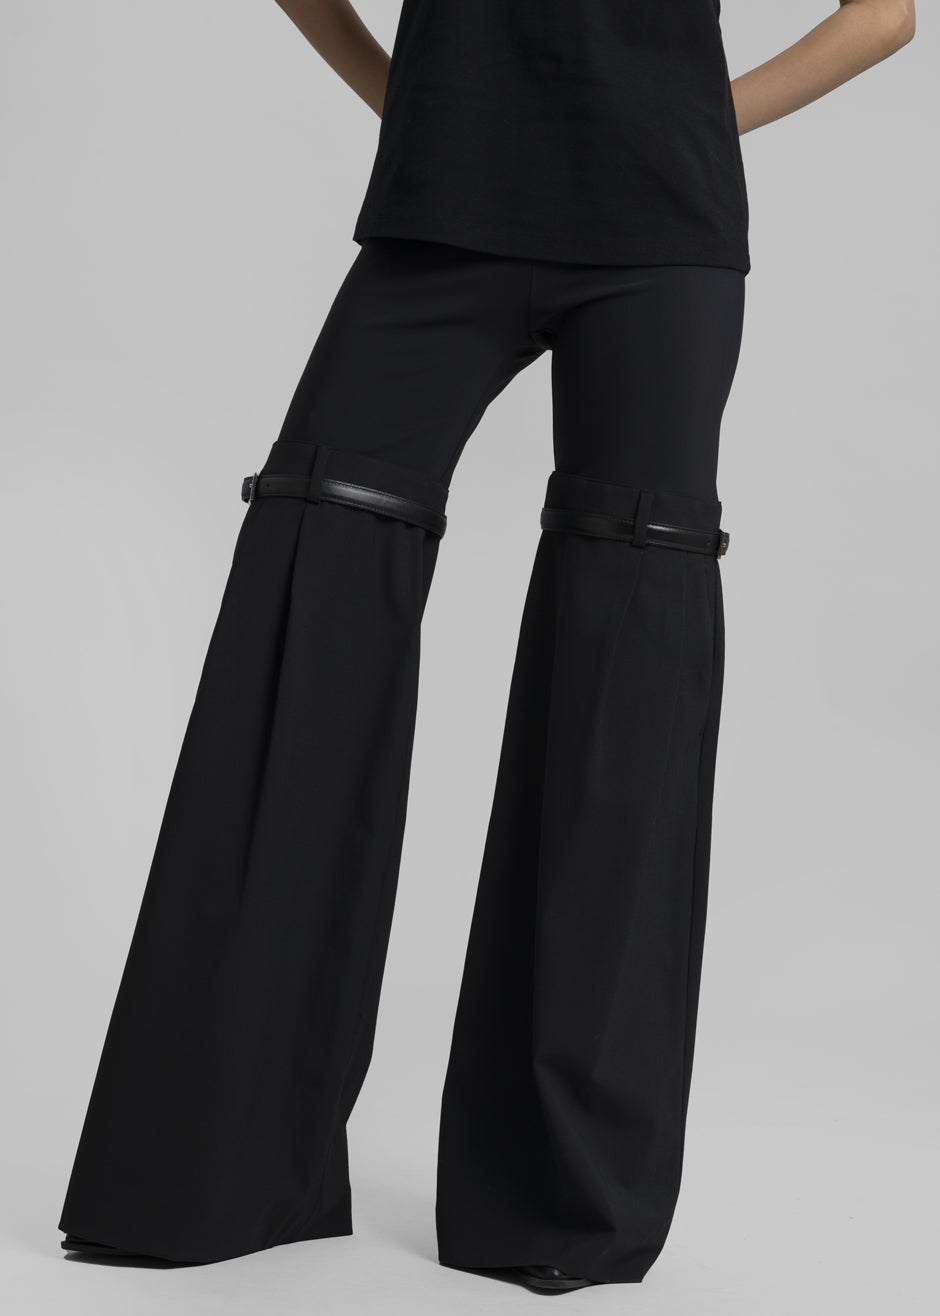 Coperni Hybrid Flare Trousers - Black - 9